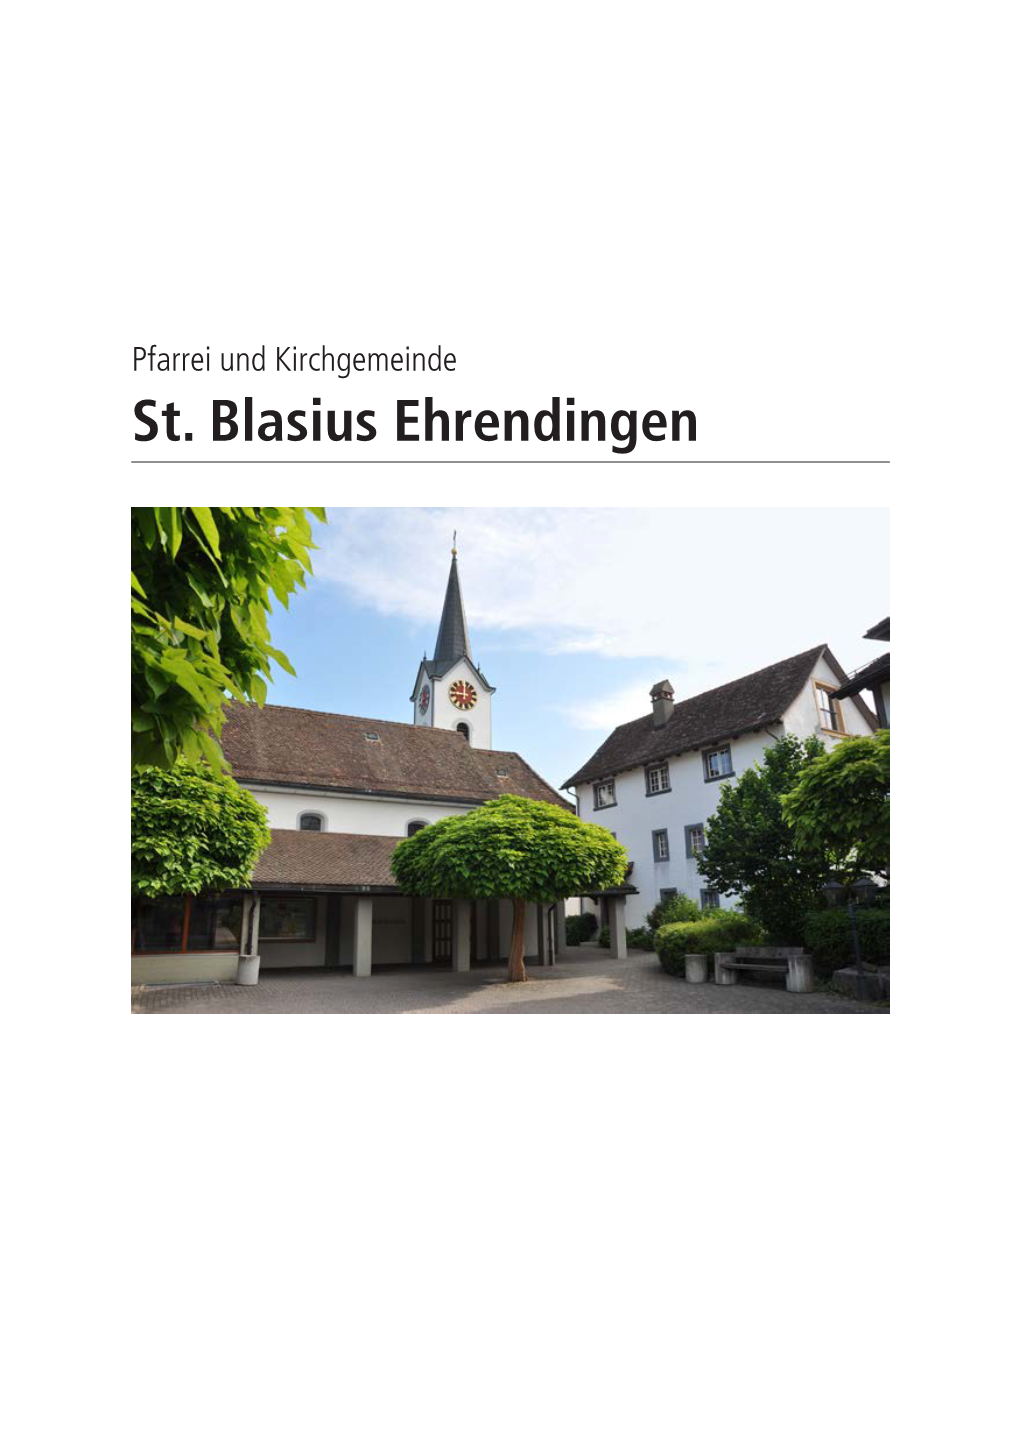 St. Blasius Ehrendingen